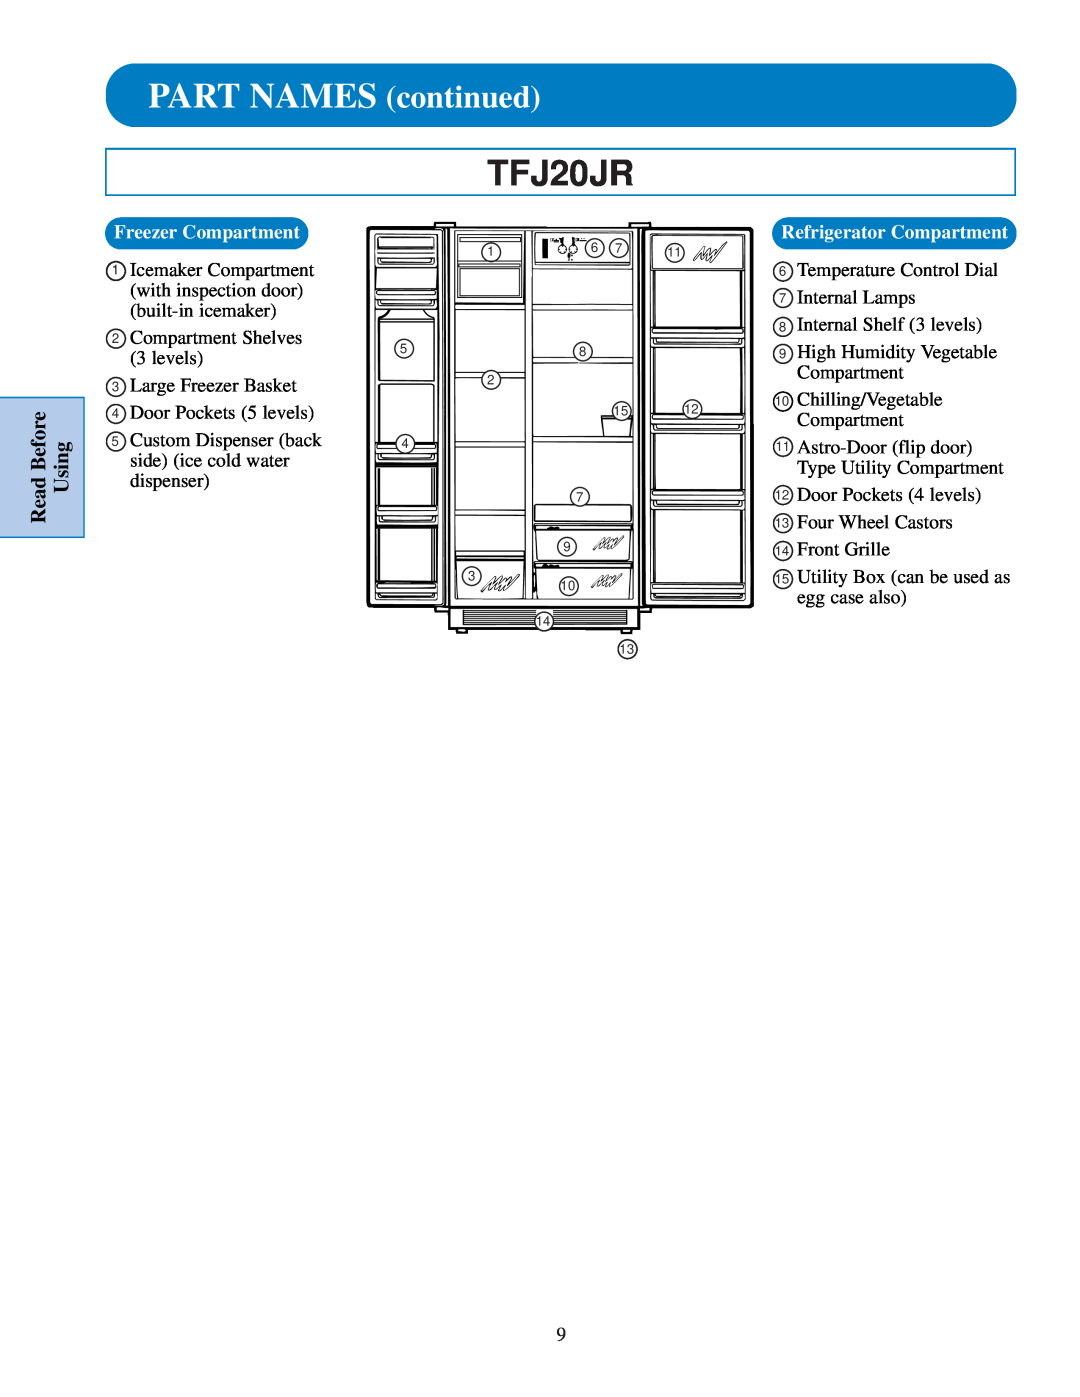 GE TPJ24PR, TPJ24BR manual PART NAMES continued, TFJ20JR, Read Before Using, Freezer Compartment, Refrigerator Compartment 